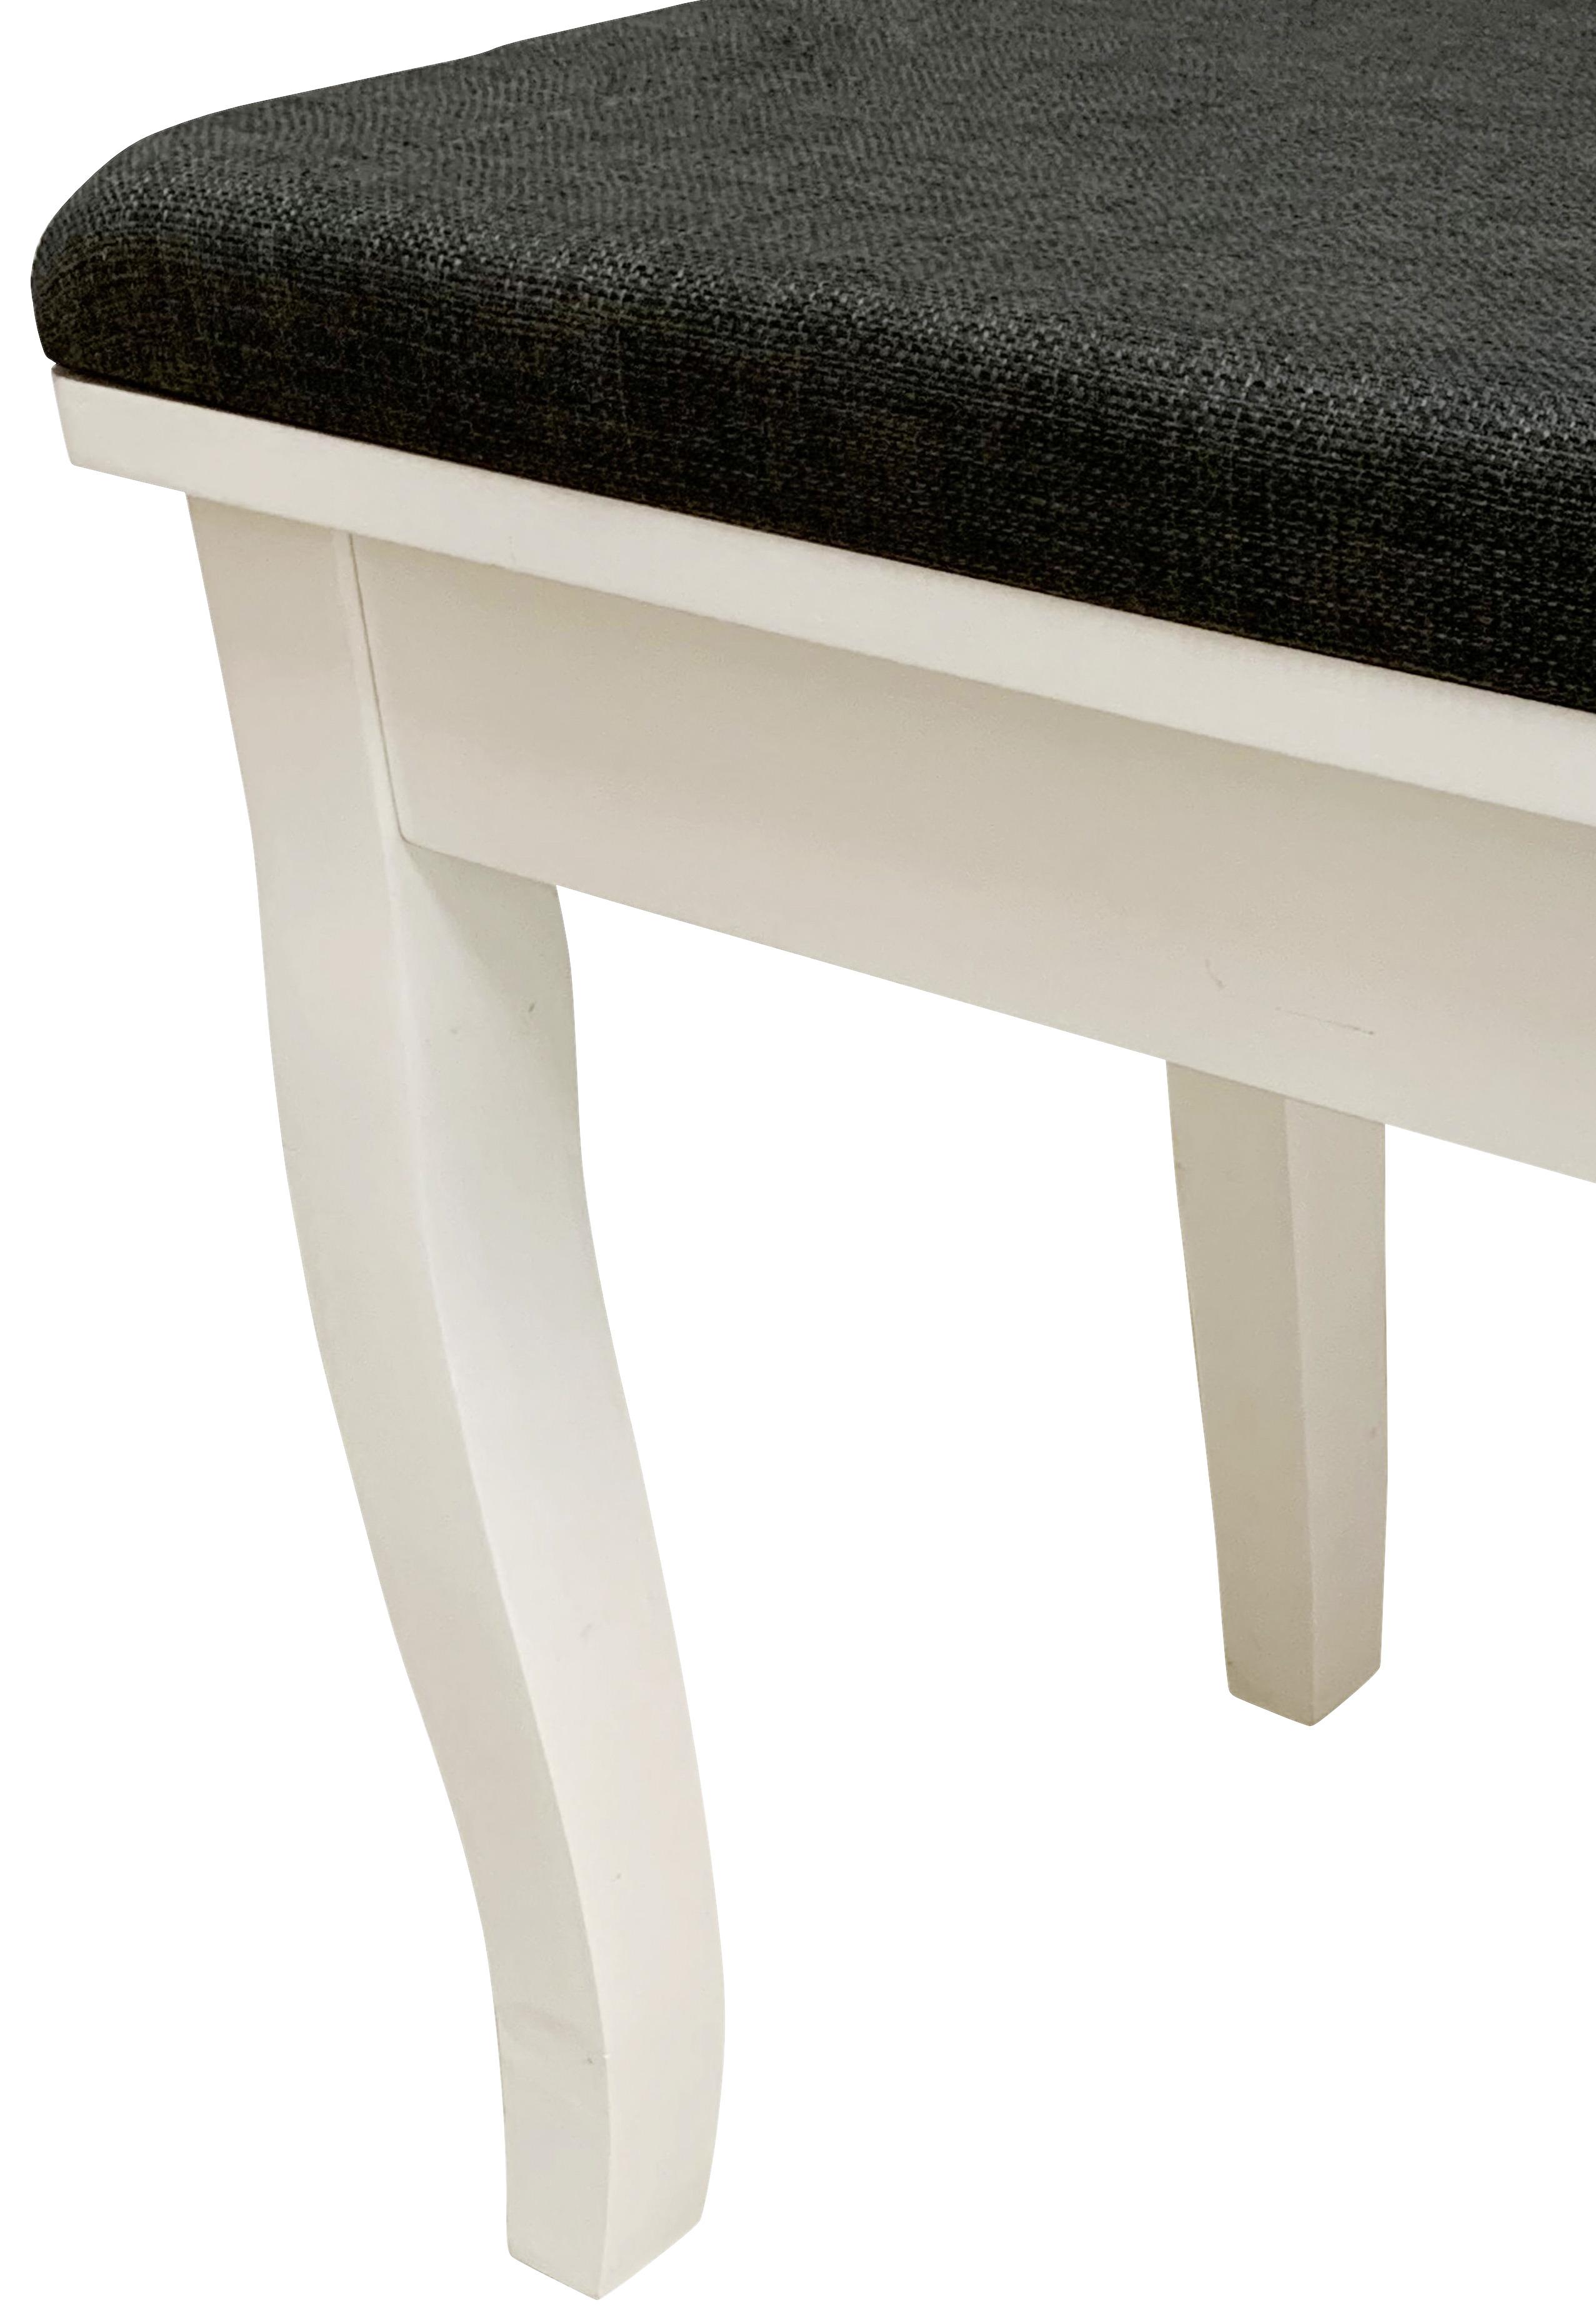 Hocker Mona Grau/Weiß Sitz Gepolstert H: 43 cm Eckig - Weiß/Grau, MODERN, Holz/Holzwerkstoff (40/43/30cm) - Luca Bessoni